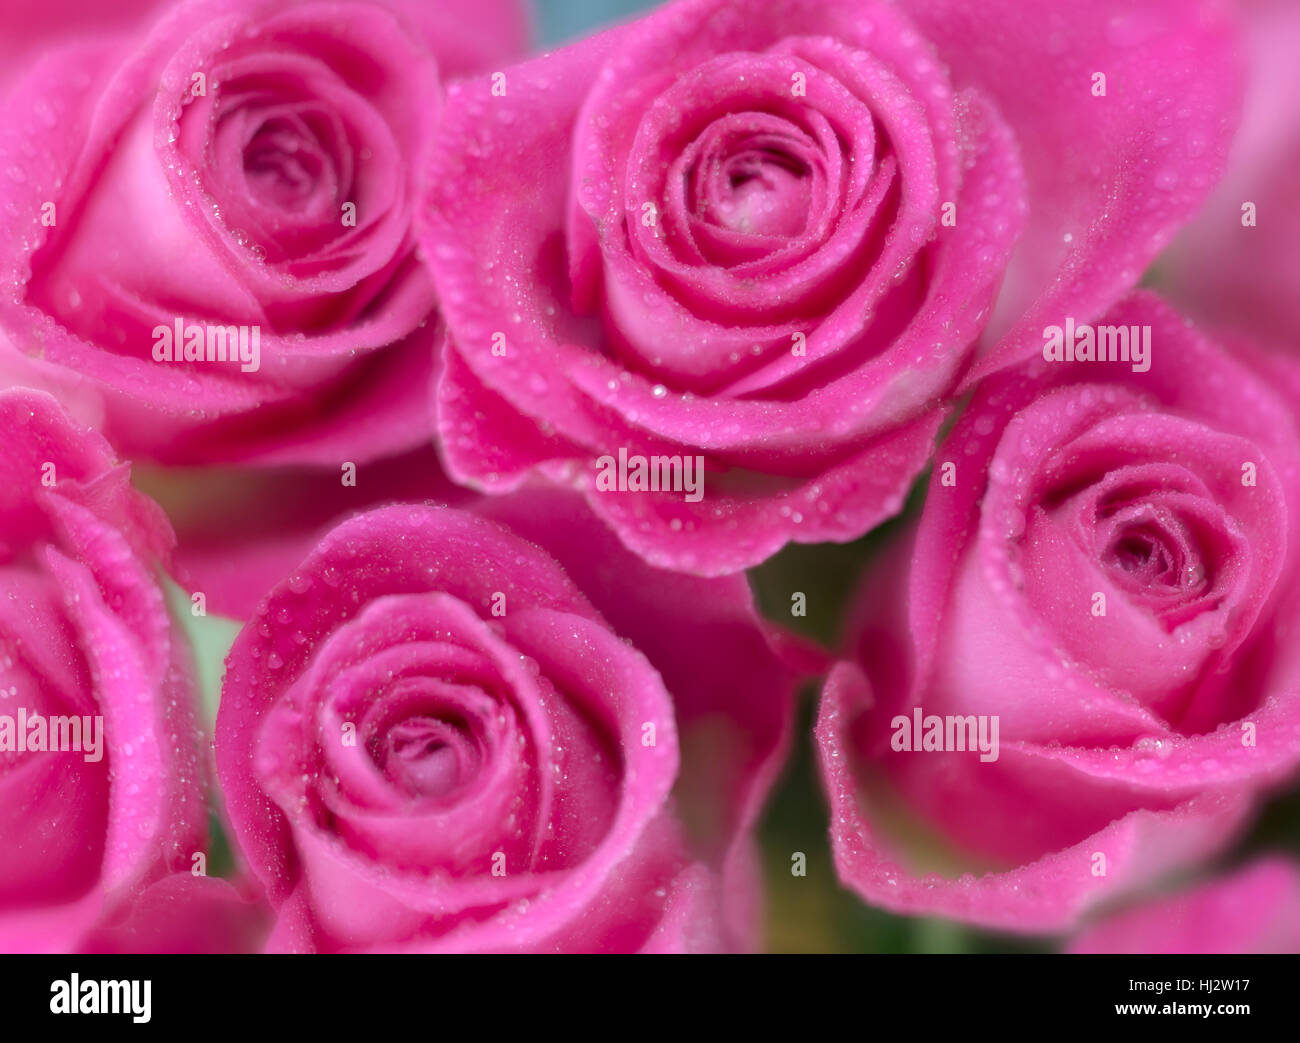 Pink roses still life using multi exposure techniques Stock Photo